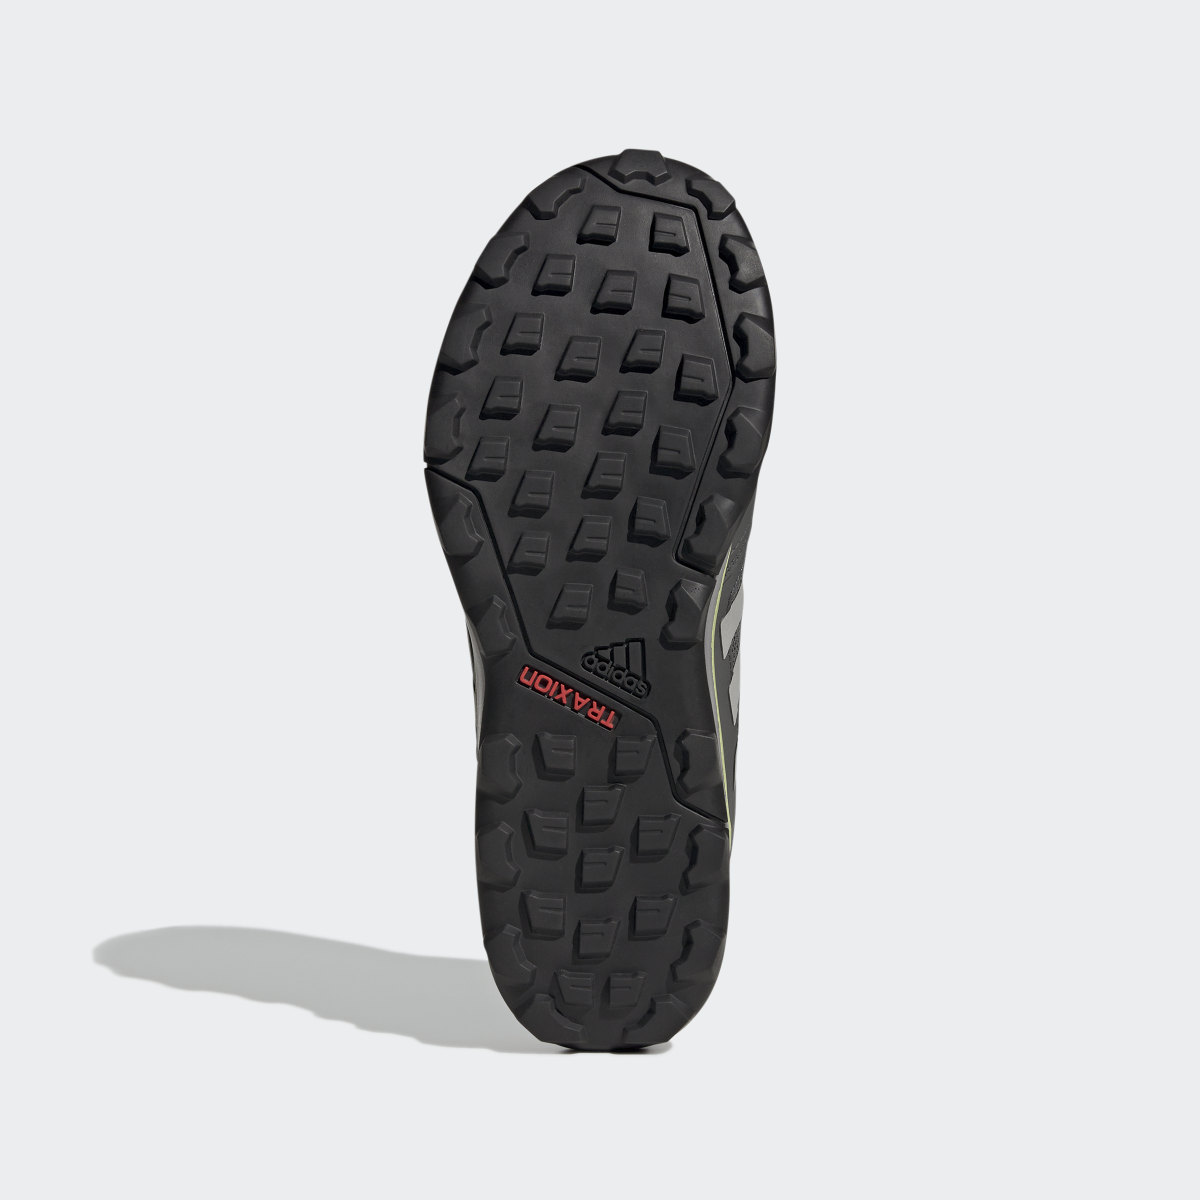 Adidas Tracerocker 2.0 GORE-TEX Trail Running Shoes. 7